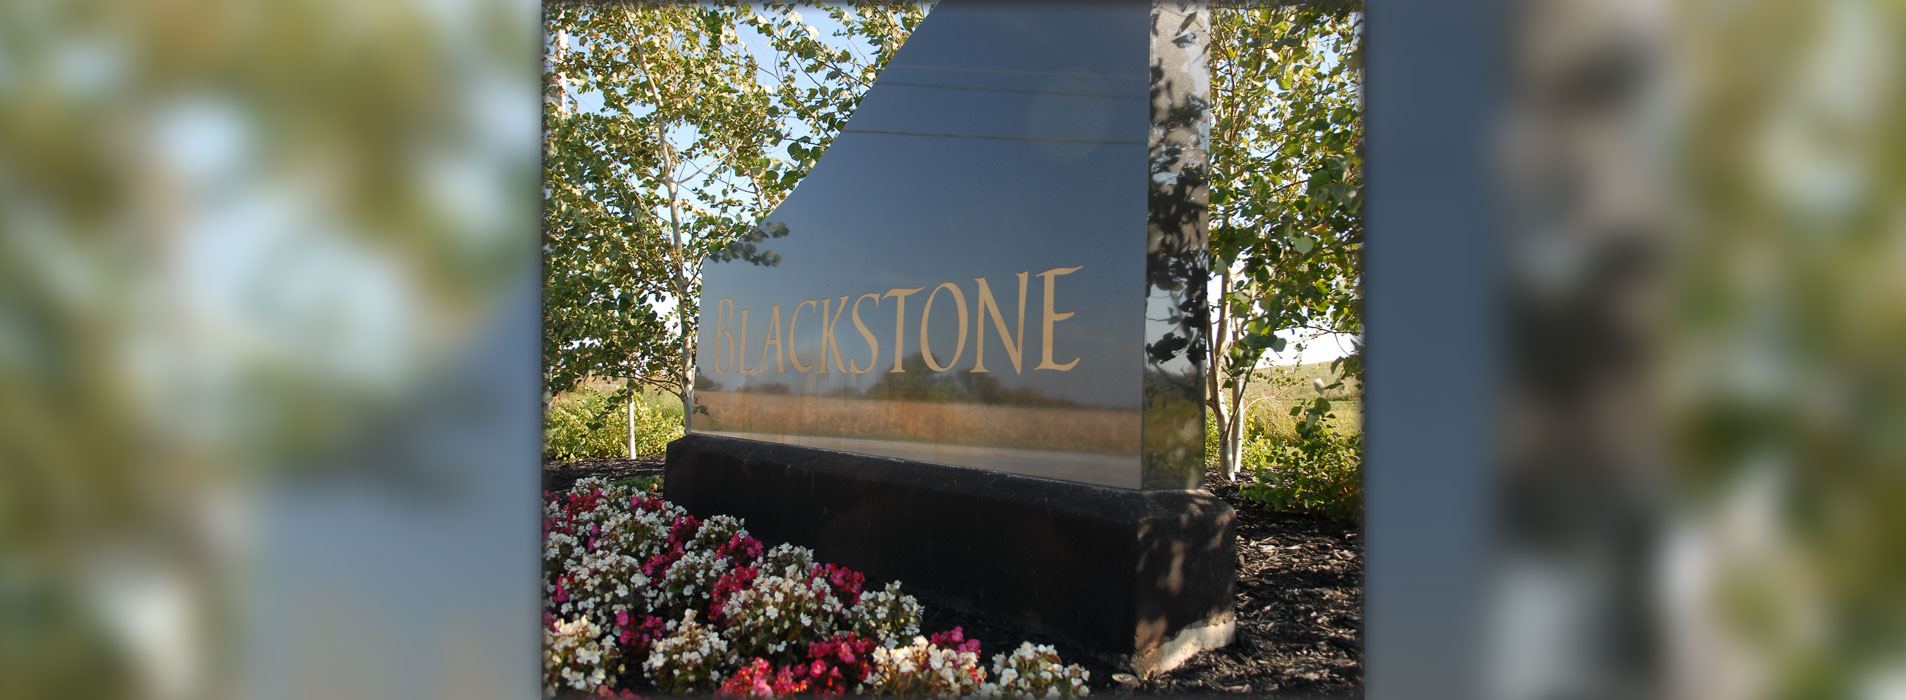 Blackstone Golf Club - 2